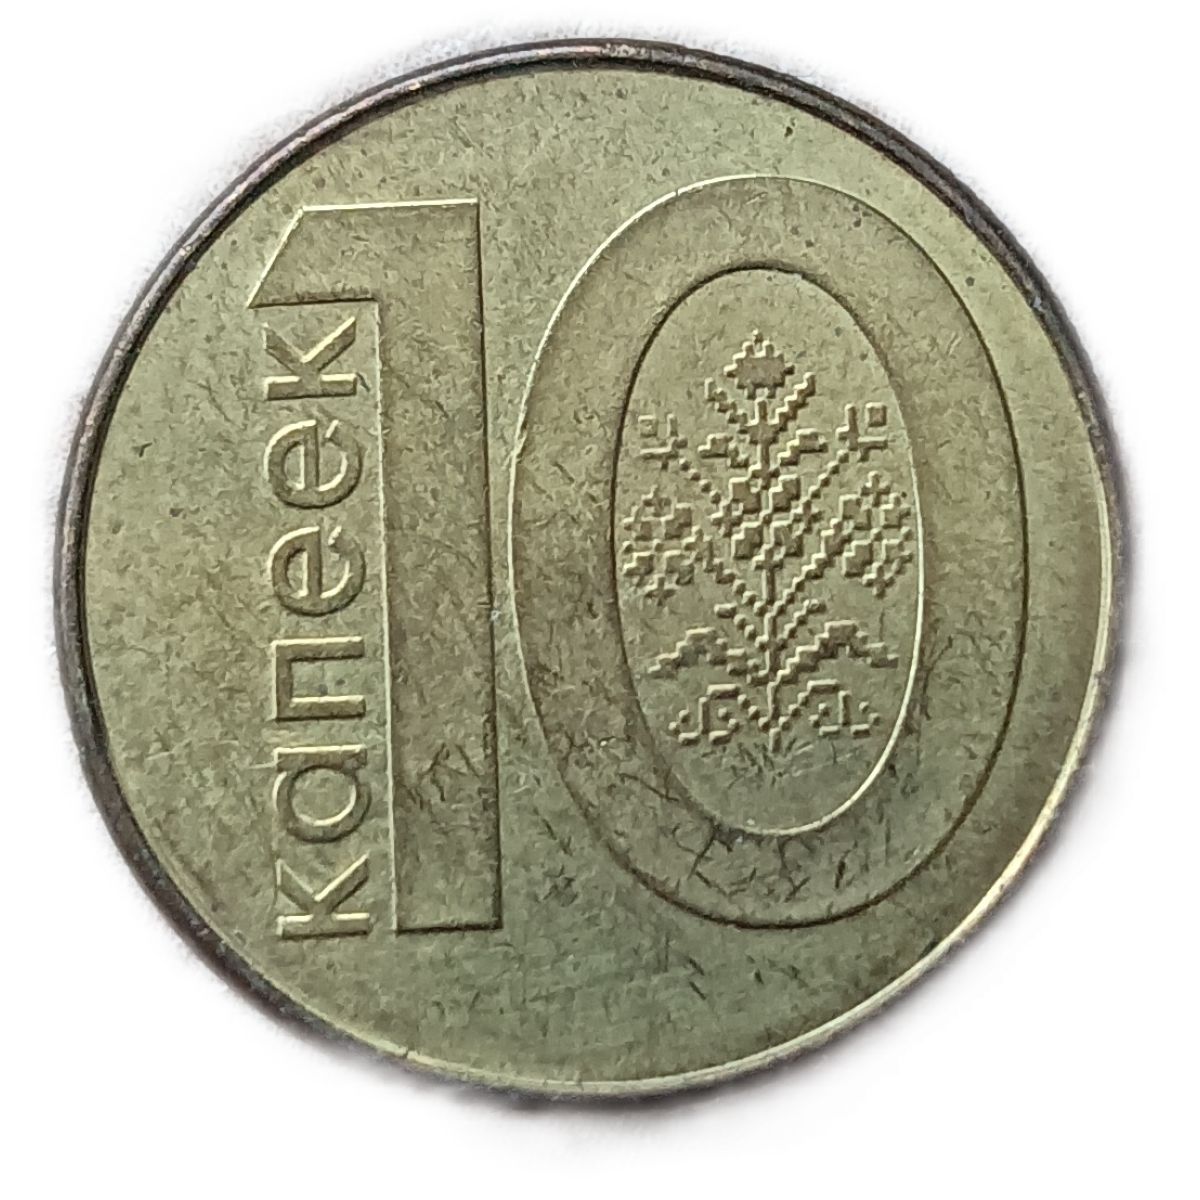 10 белорусских копеек. Белорусская копейка 2009. Белорусские монеты. Белорус 10 копеек 2009 года.